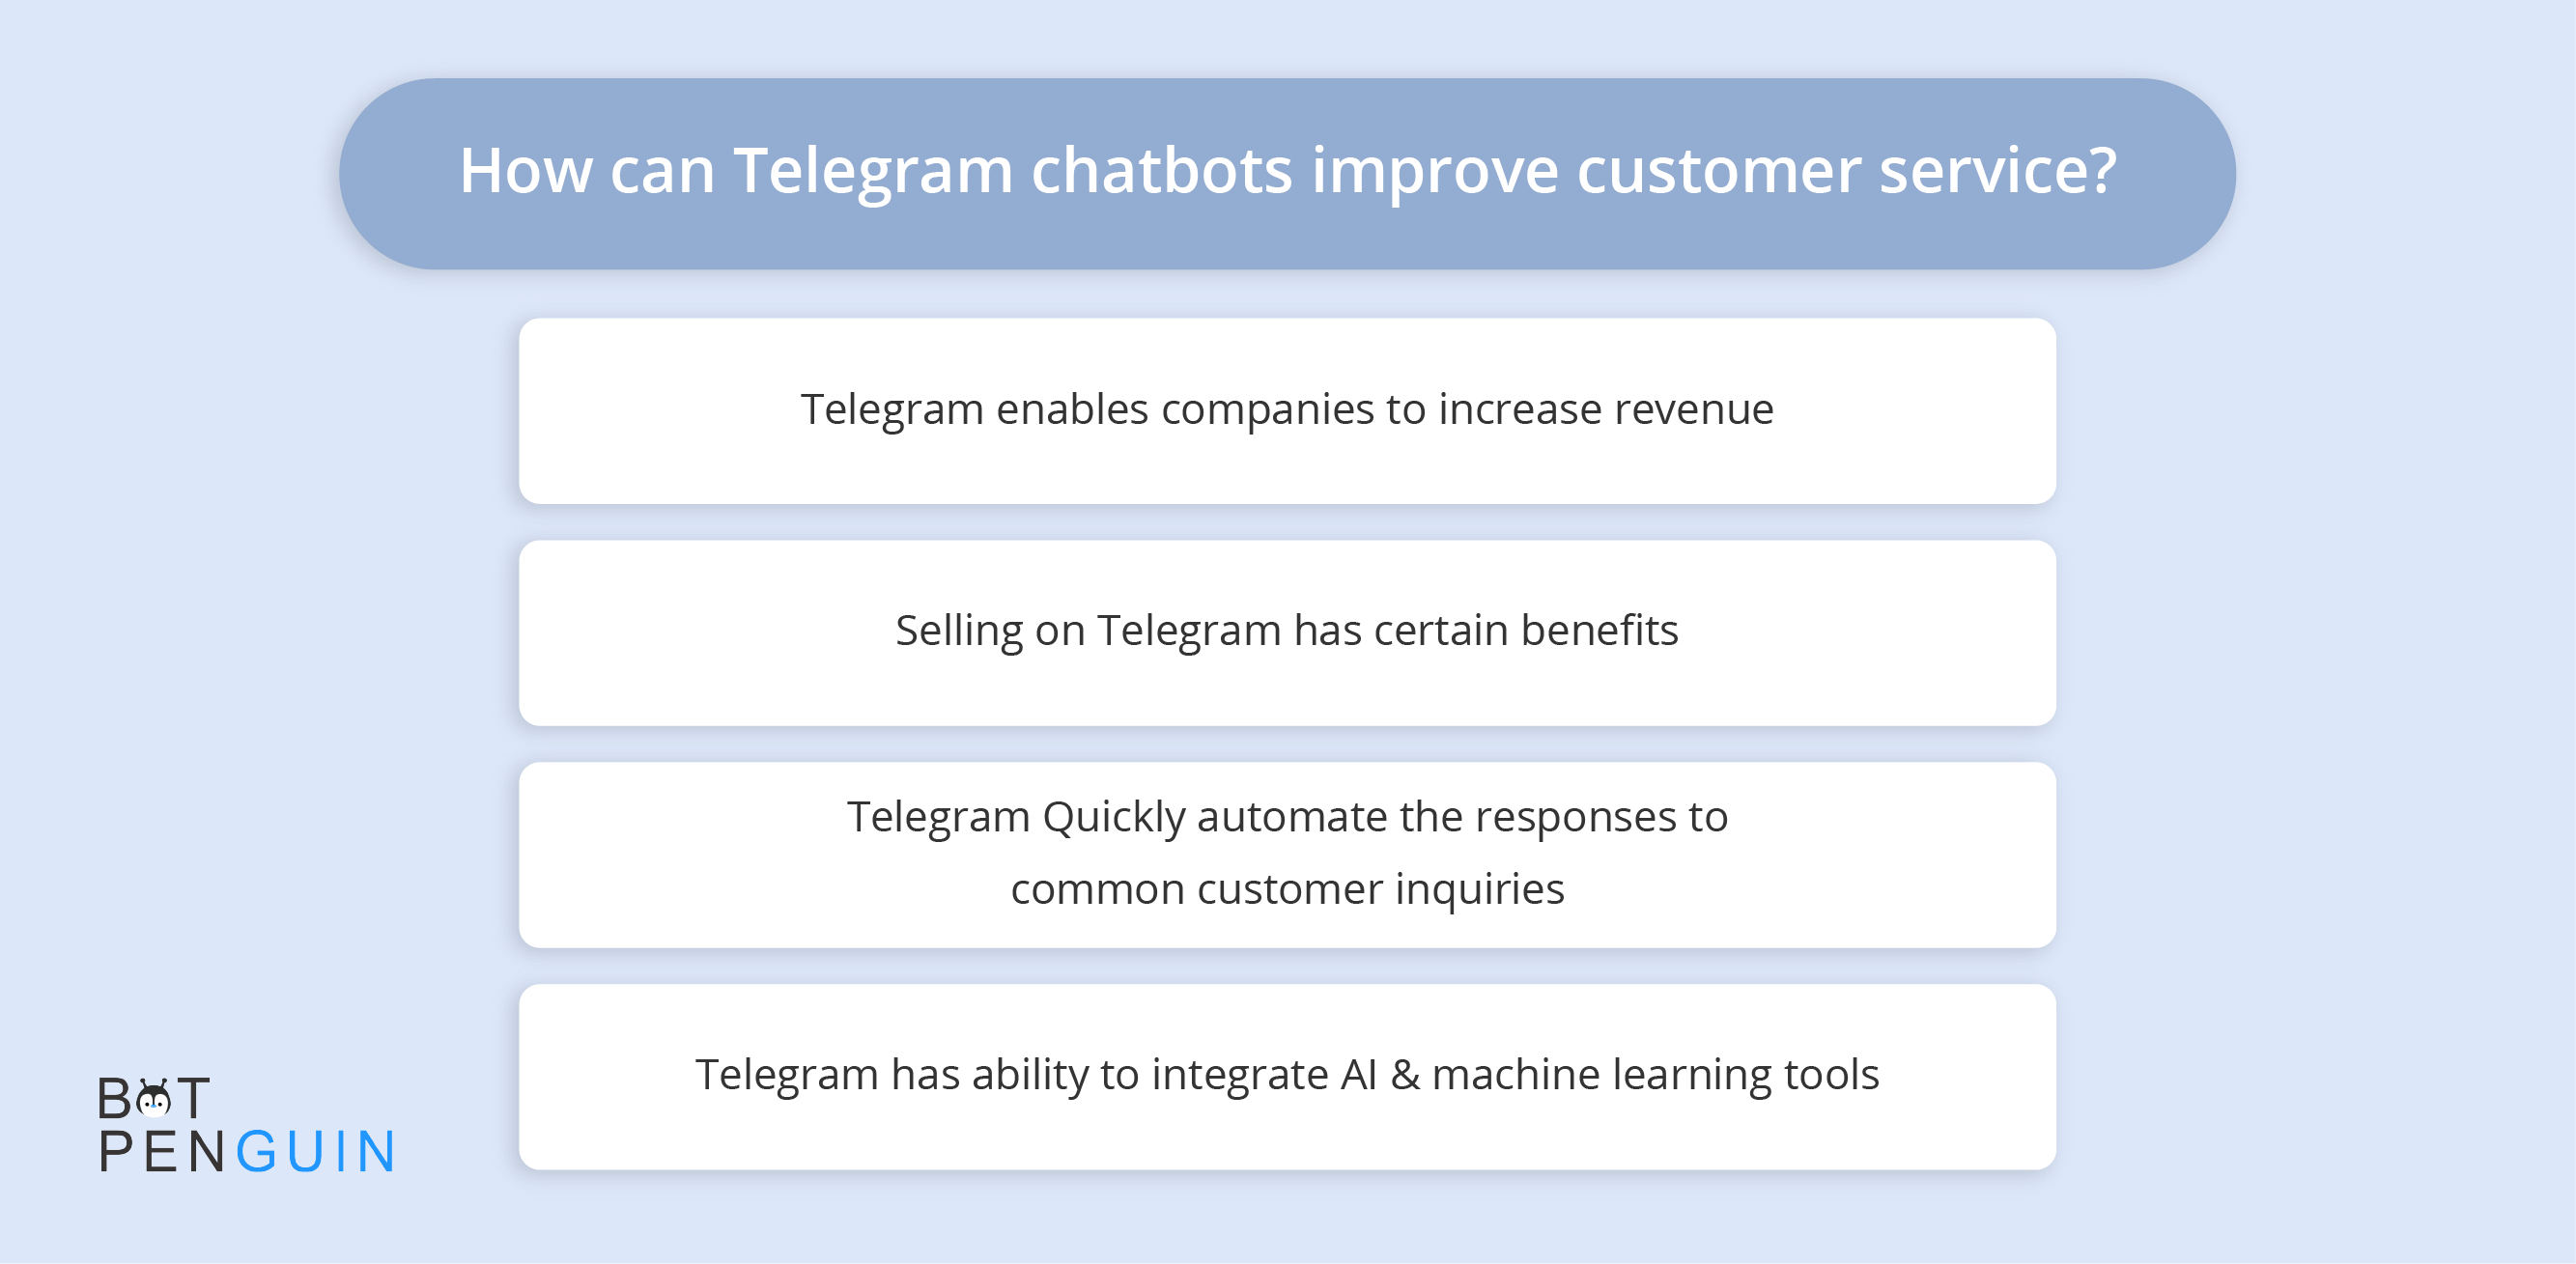 How can Telegram chatbots improve customer service?